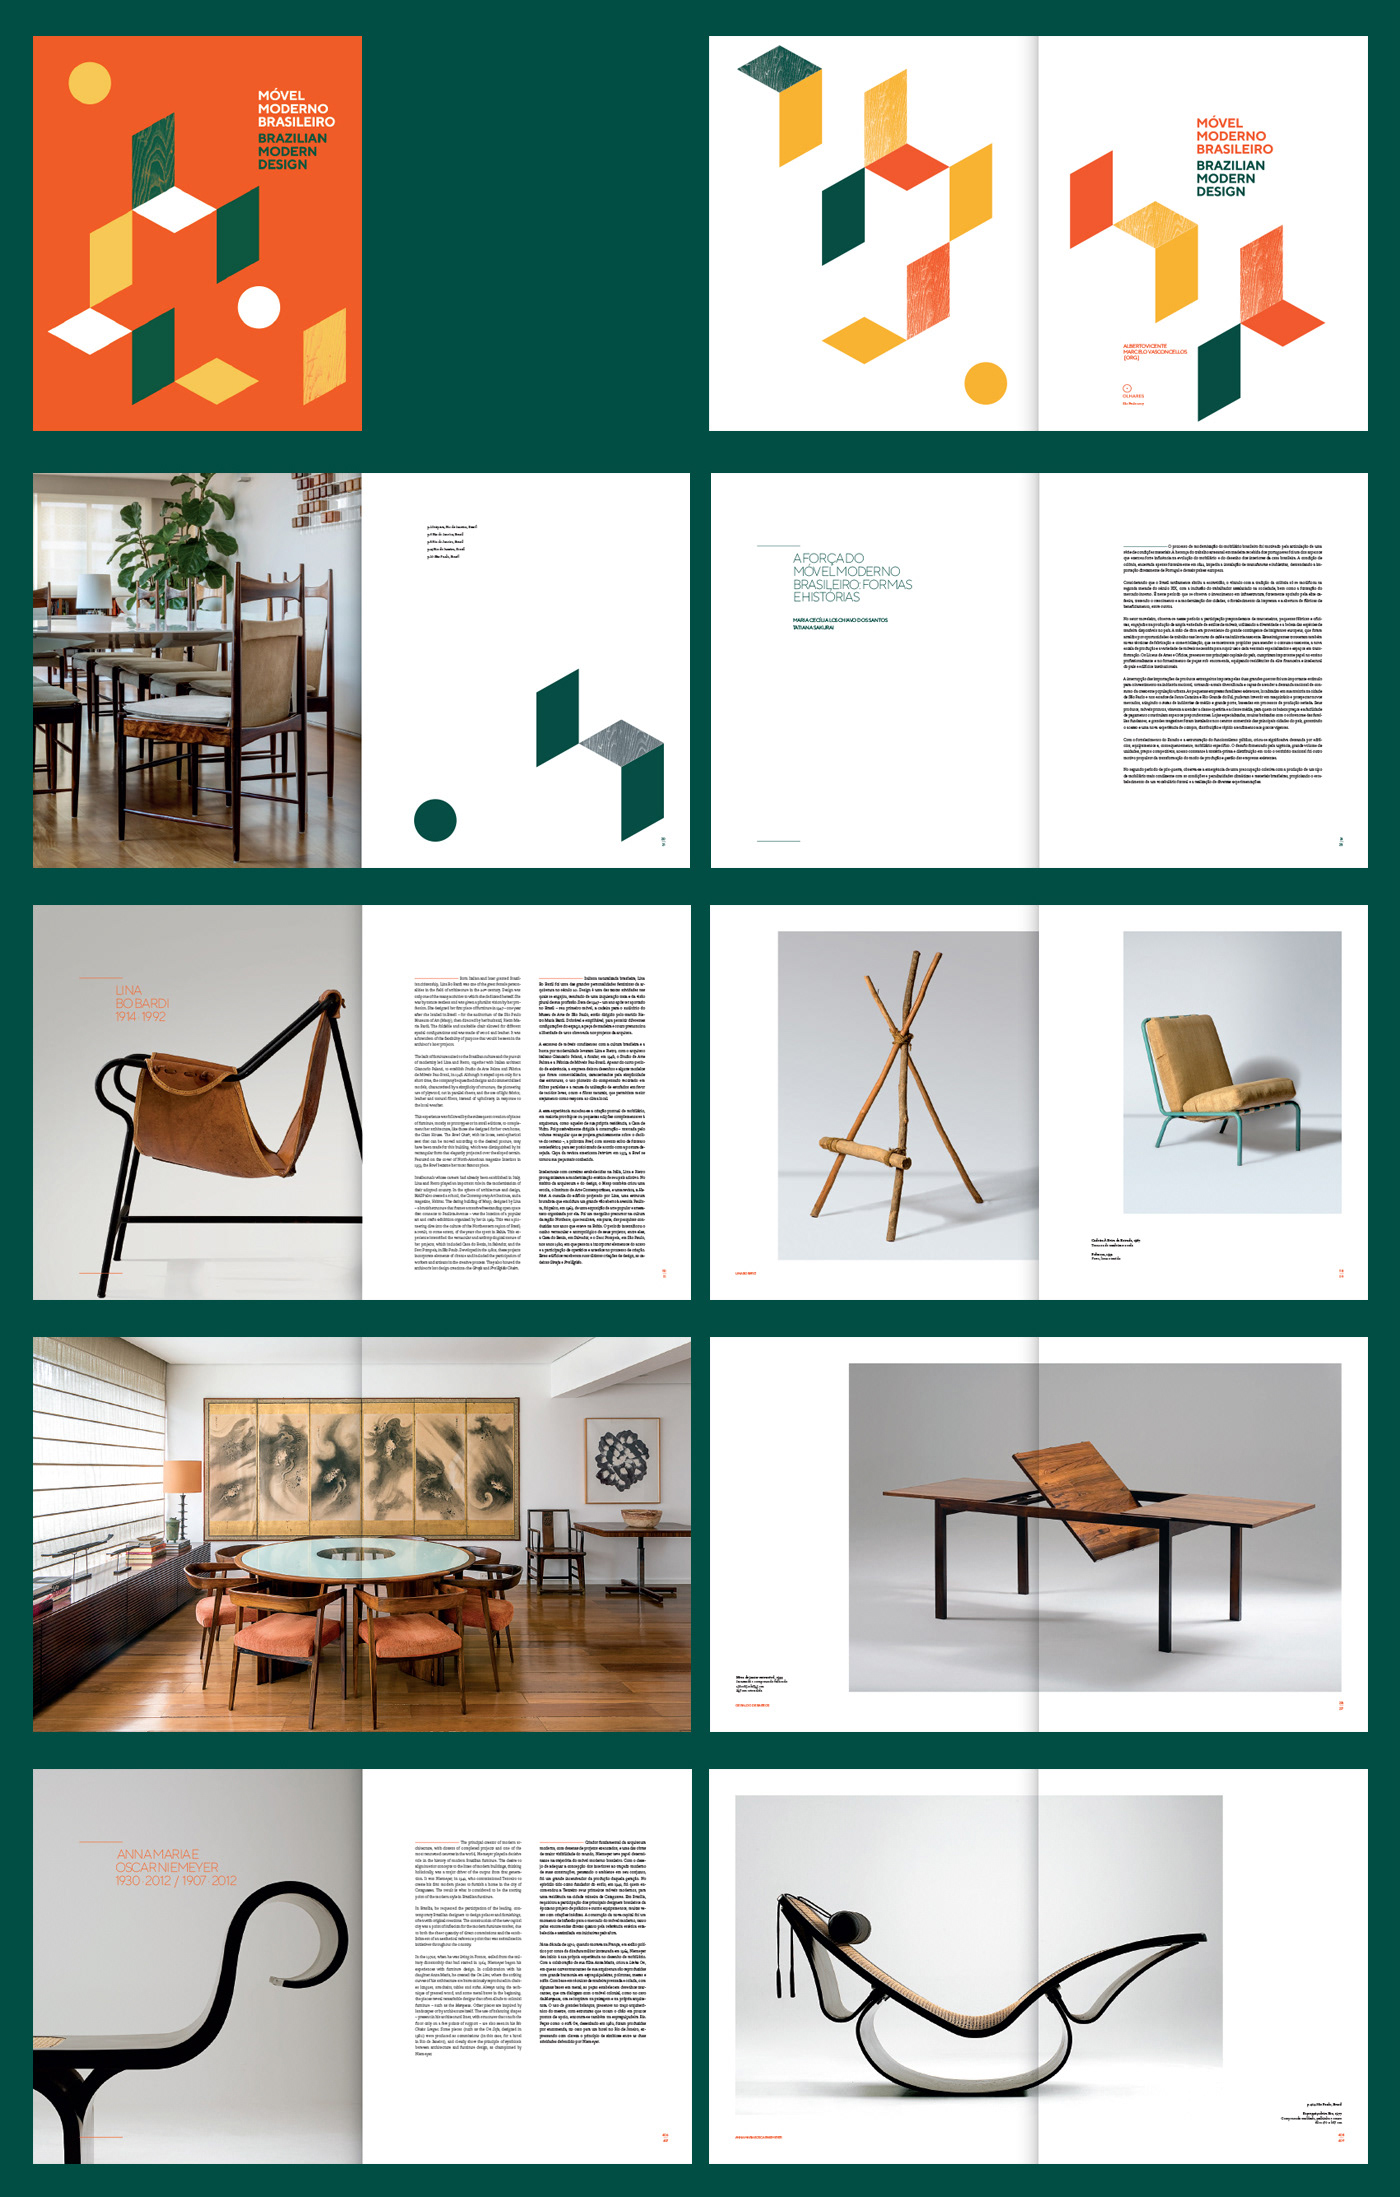 Editora Olhares brazilian design furniture design  modernism brazilian modernism construtivismo modernismo design editorial editorial book